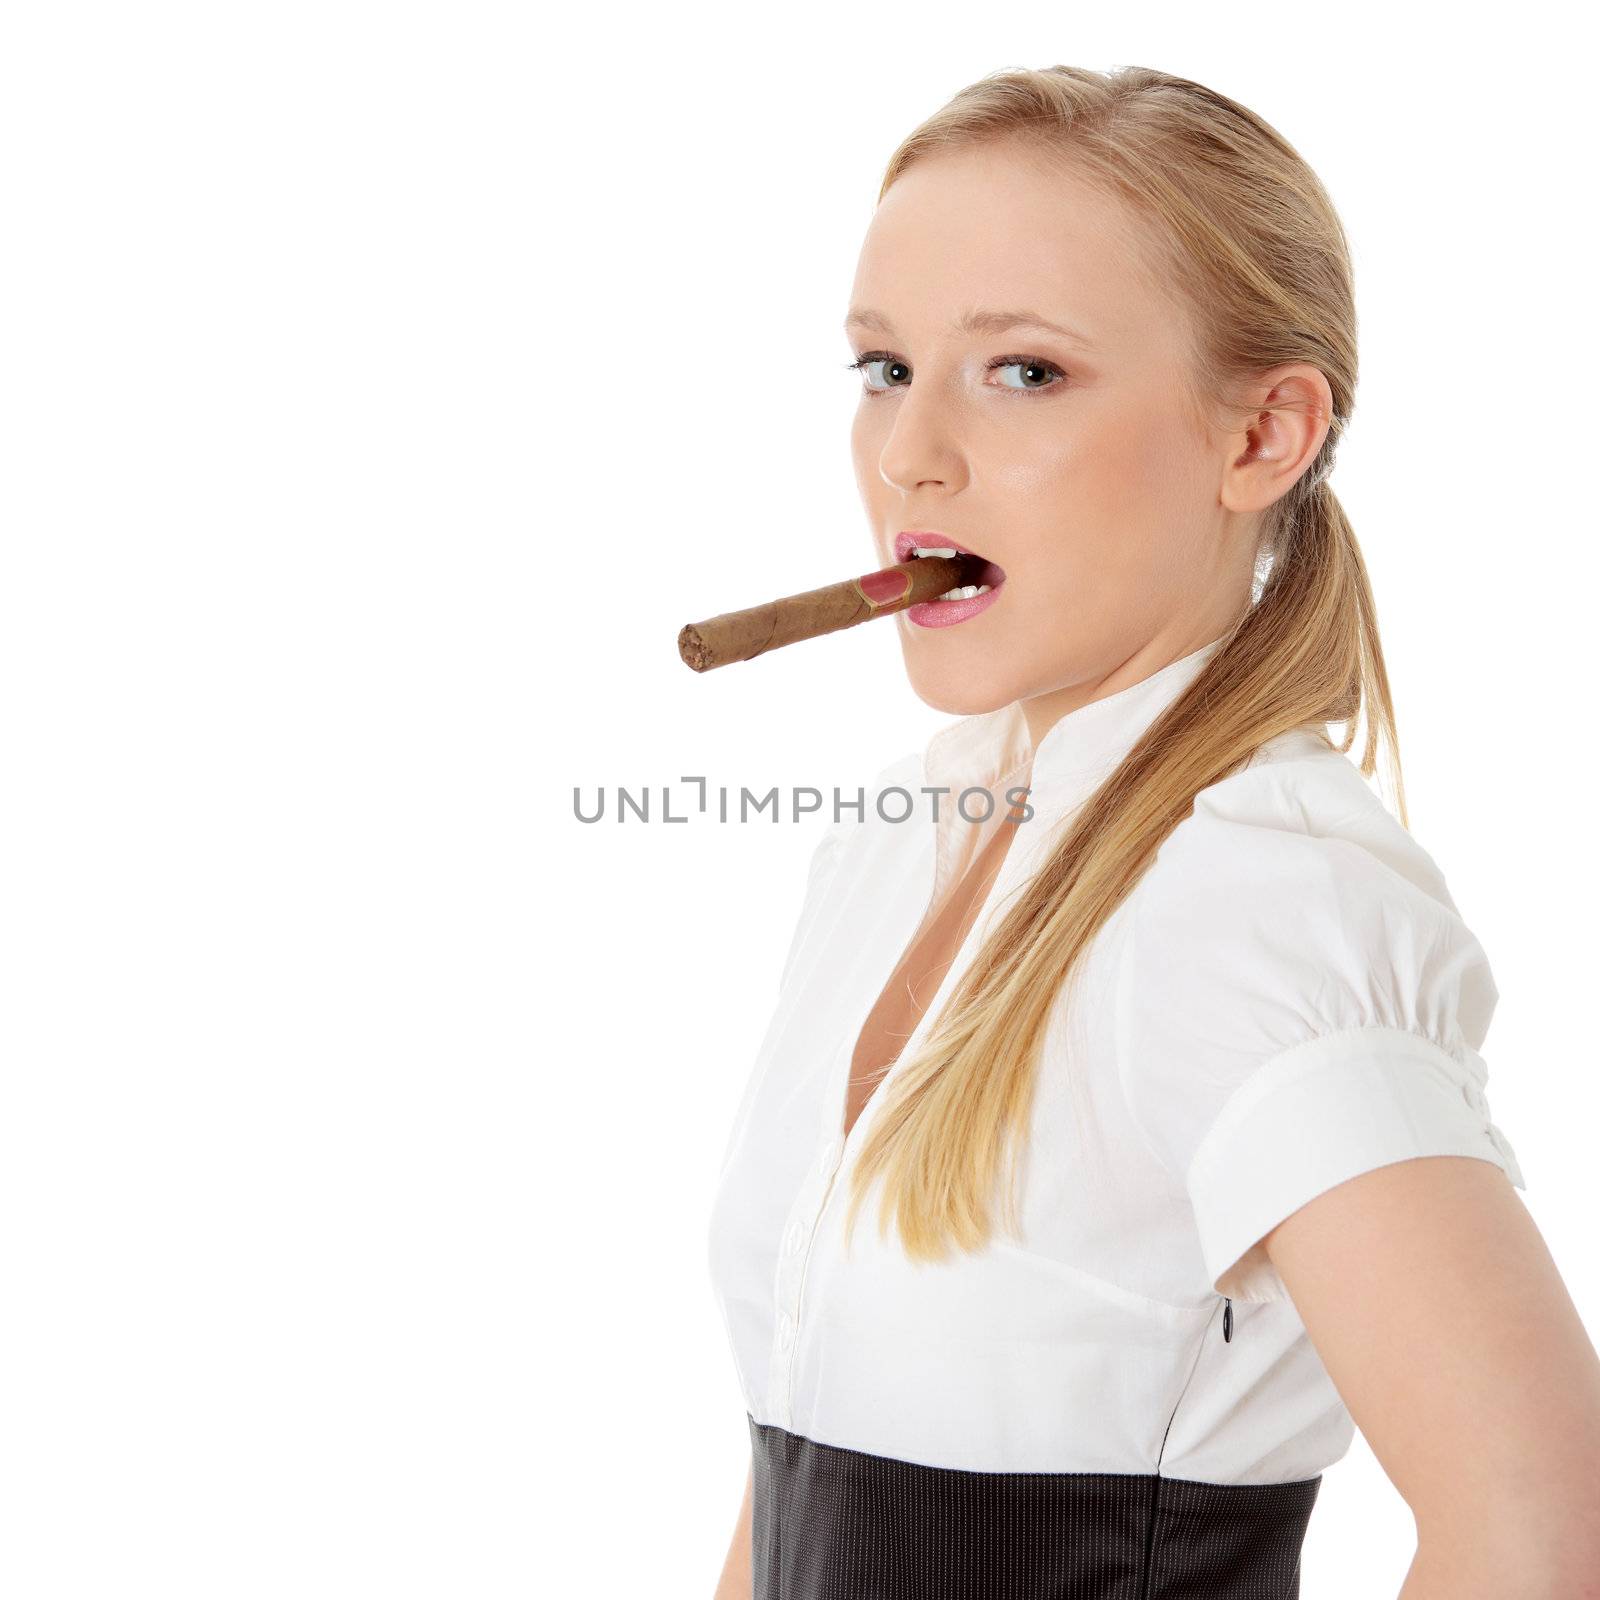 Businesswoman (boss) with cigar (feminism concept)